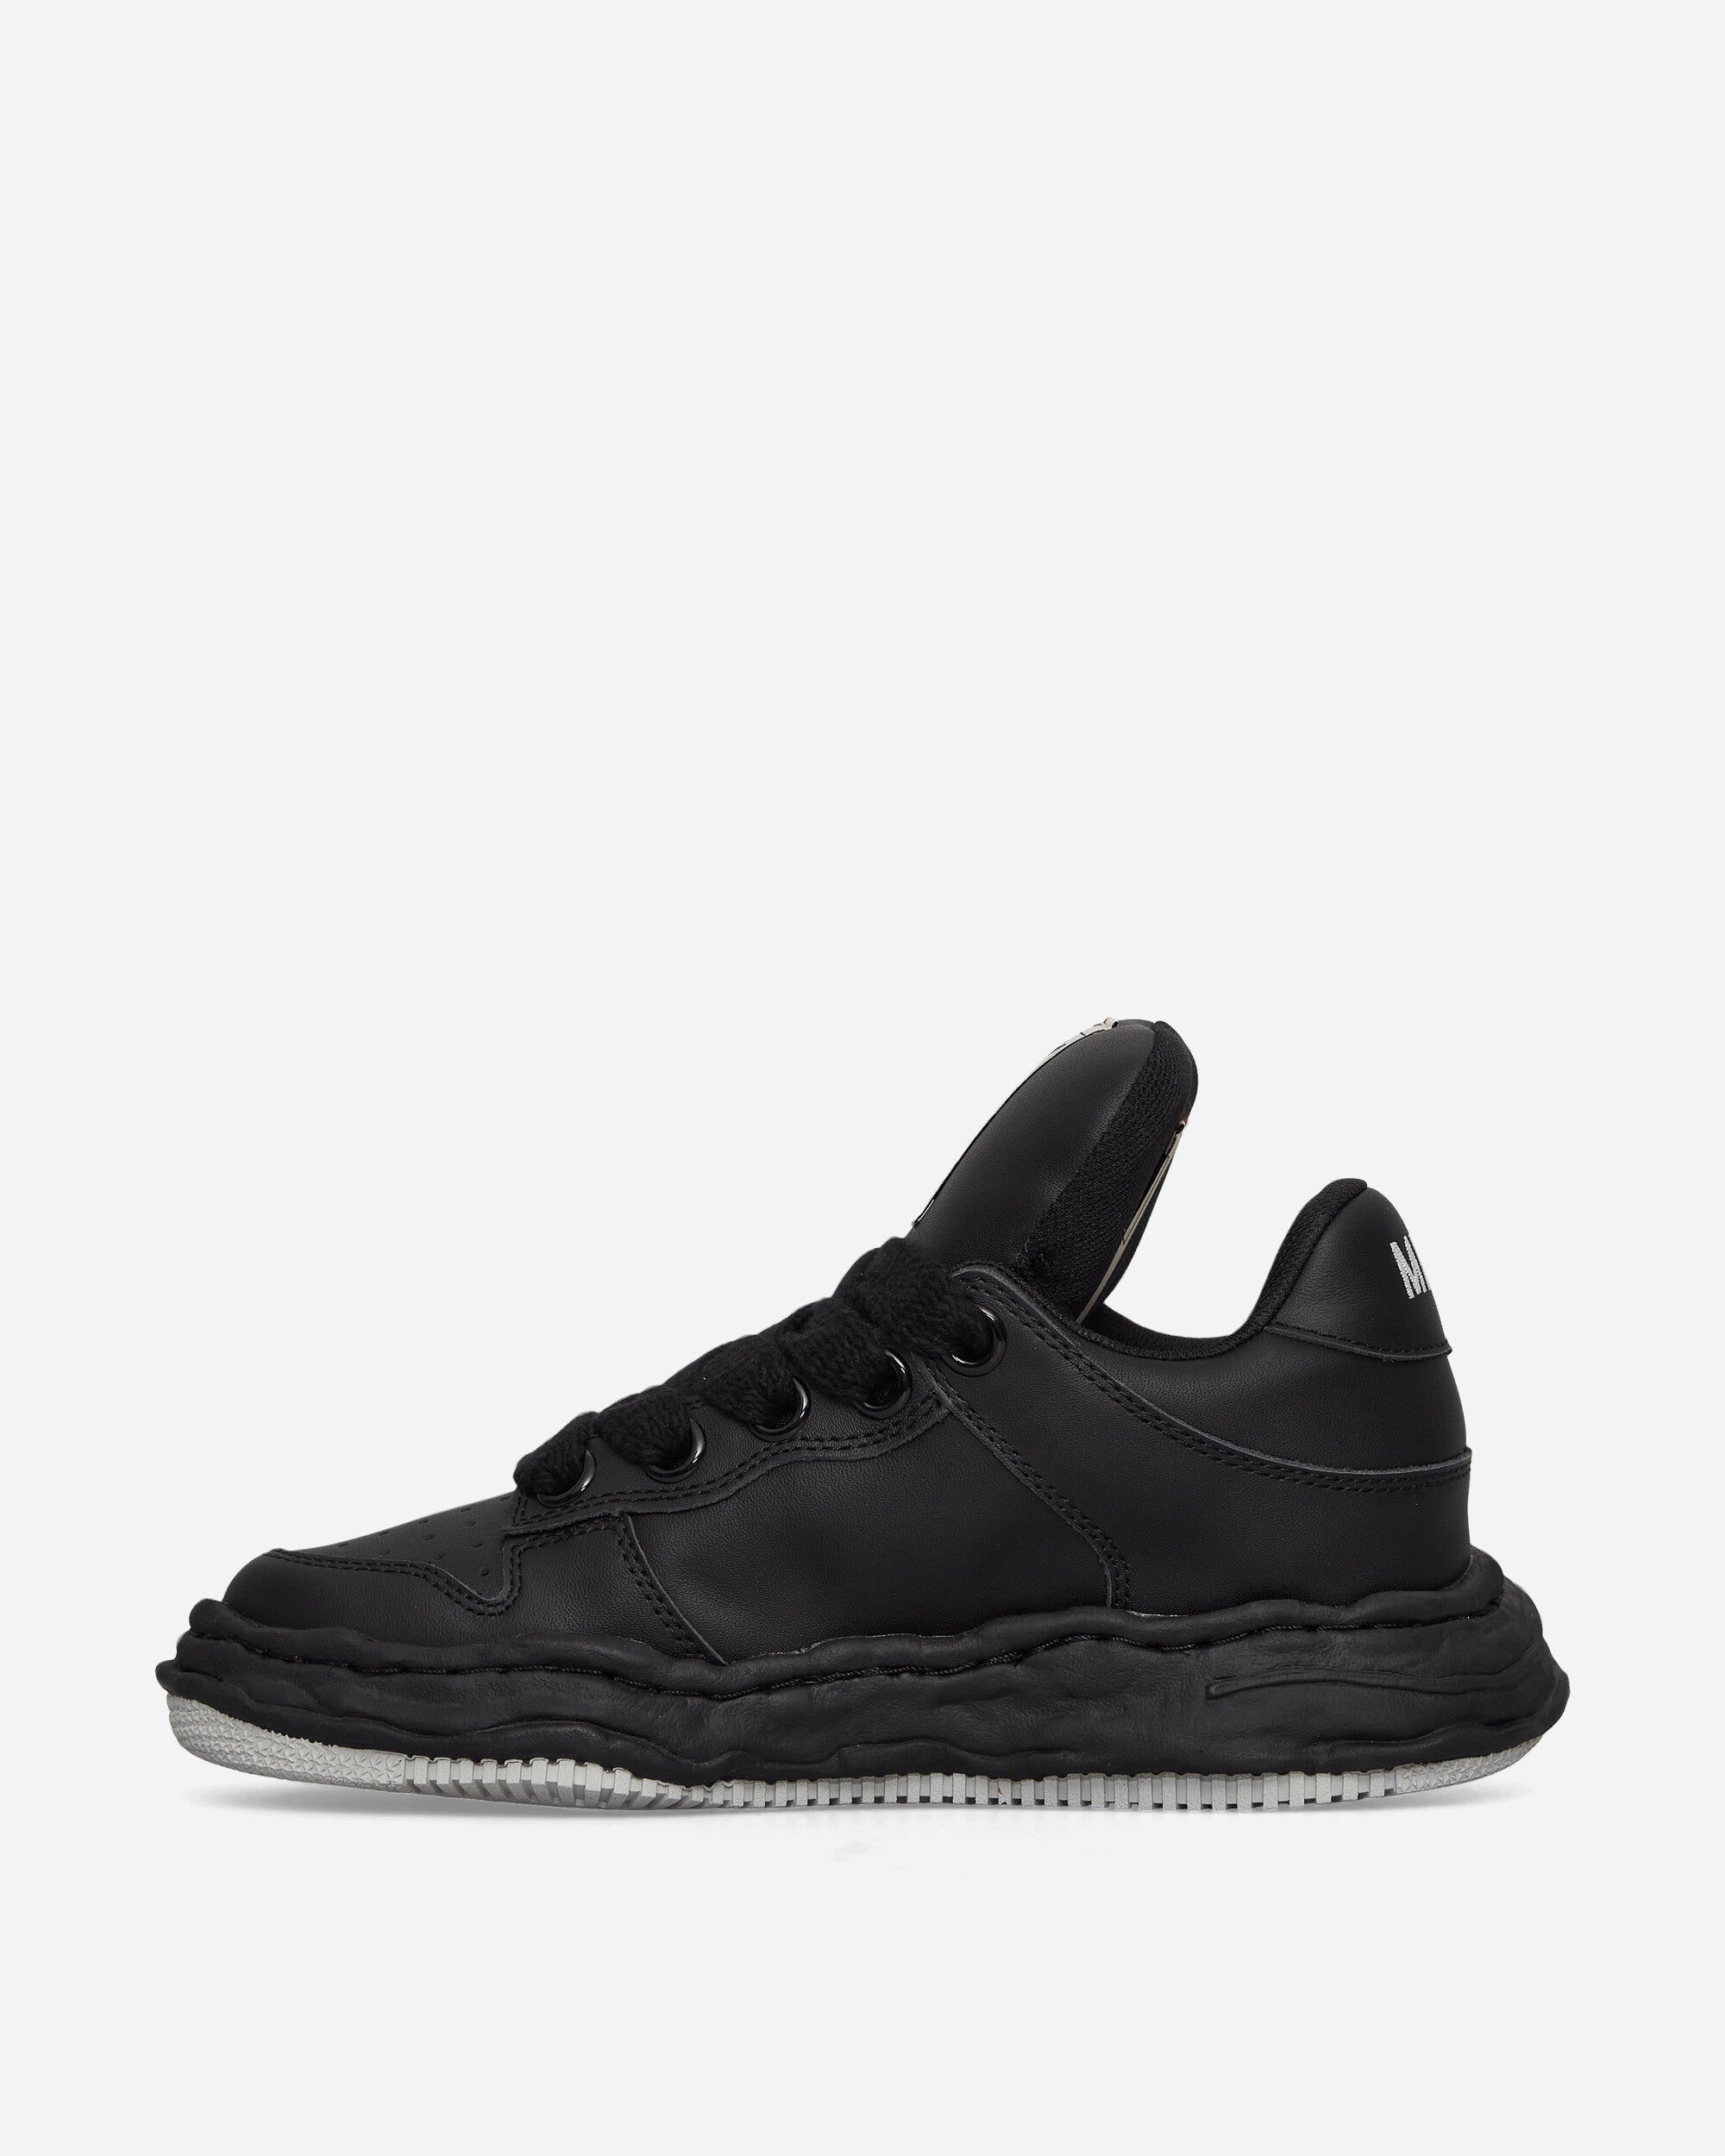 Maison MIHARA YASUHIRO Wayne/Original Sole Leather Puffer Low-Top Sneakers Black/Black Sneakers Low A12FW718 BLACKBLACK